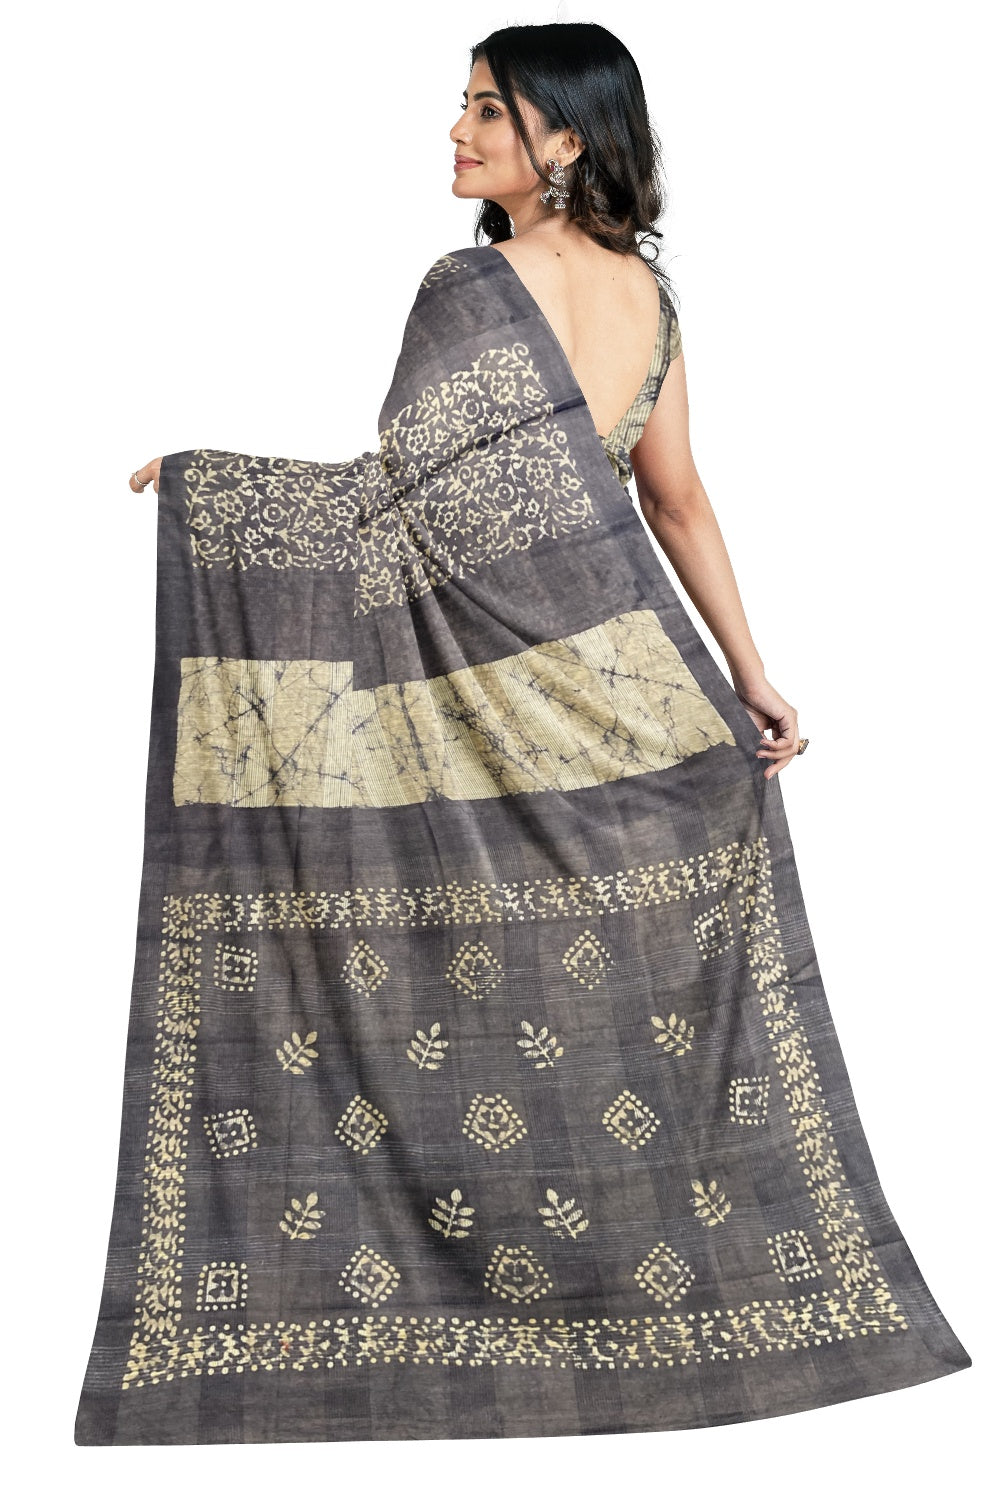 Southloom Designer Cotton Saree with Baswara Design